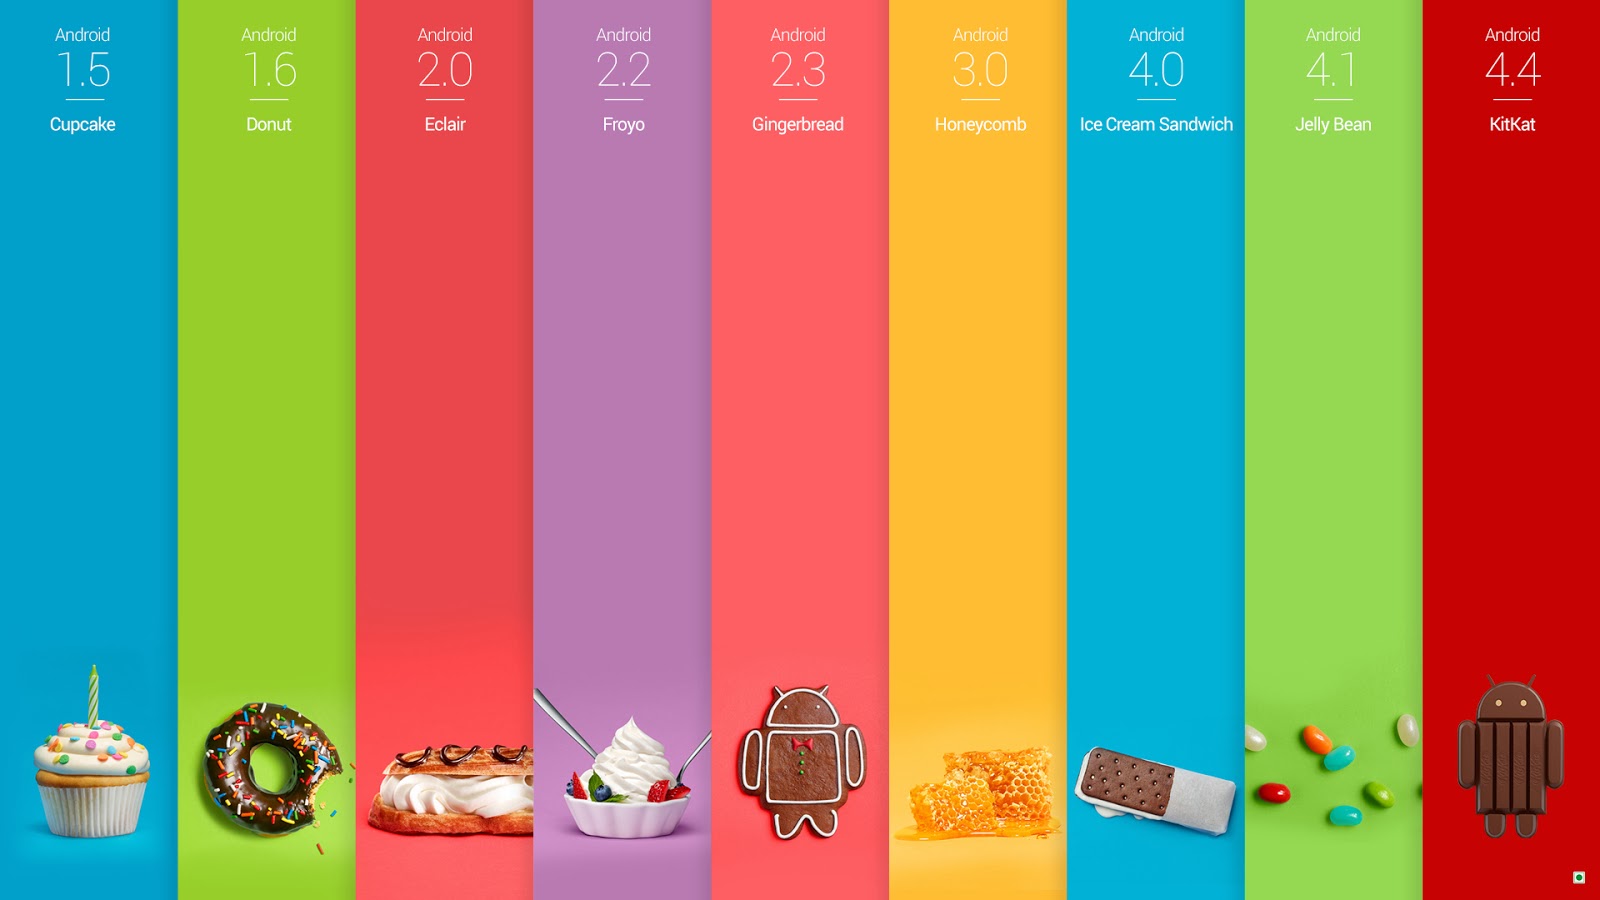 Android evolution Wallpaper